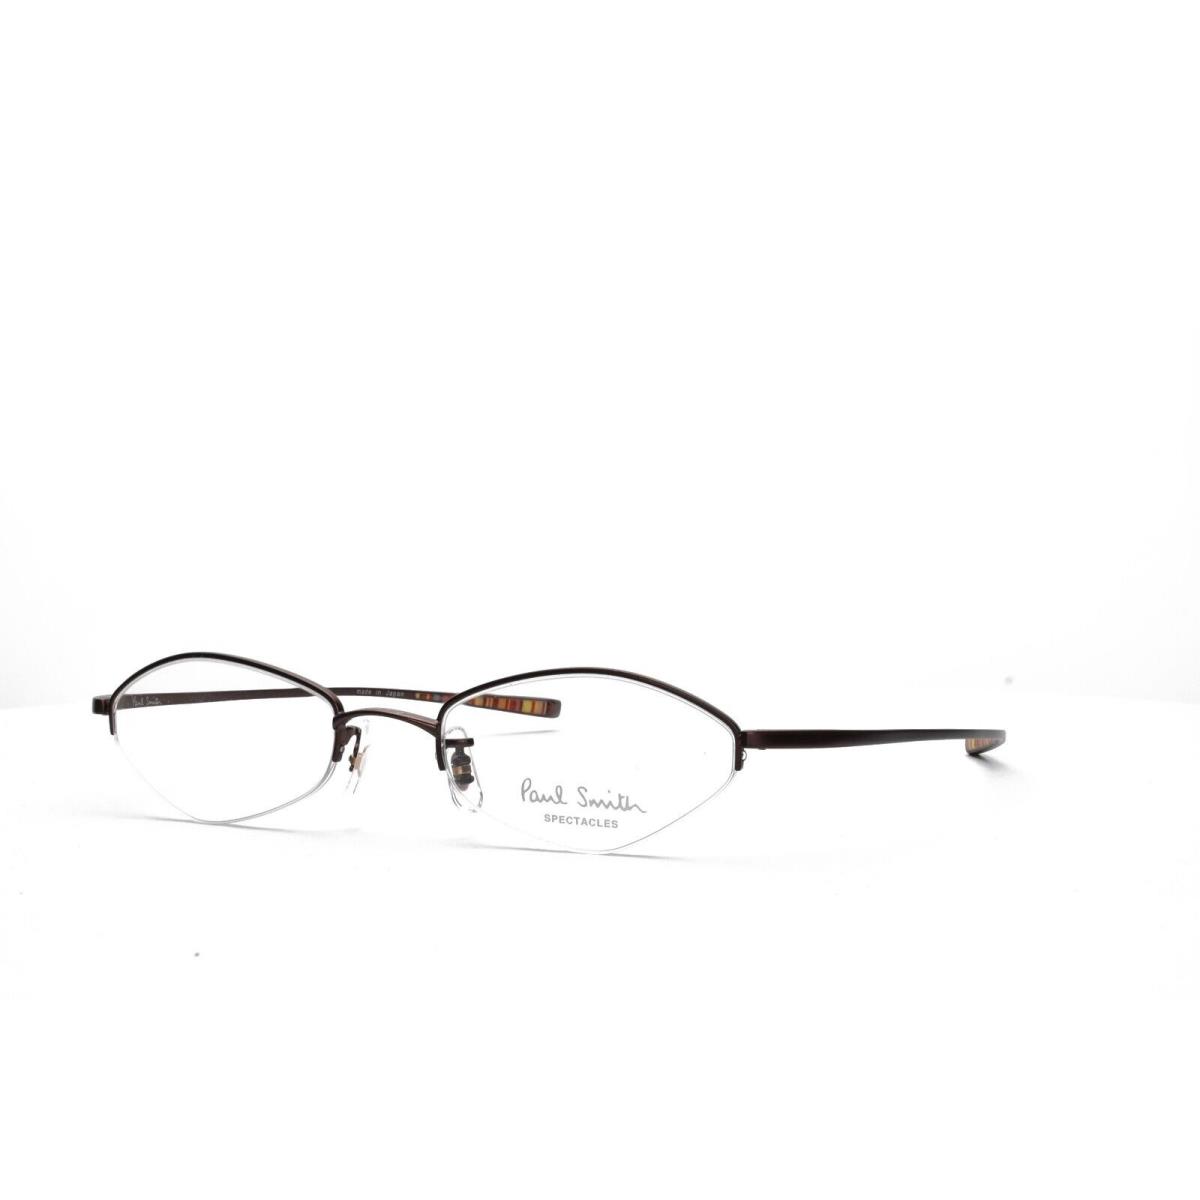 Paul Smith 179 Cho 46-19-140 Brown Vtg Vintage Eyeglasses Frames